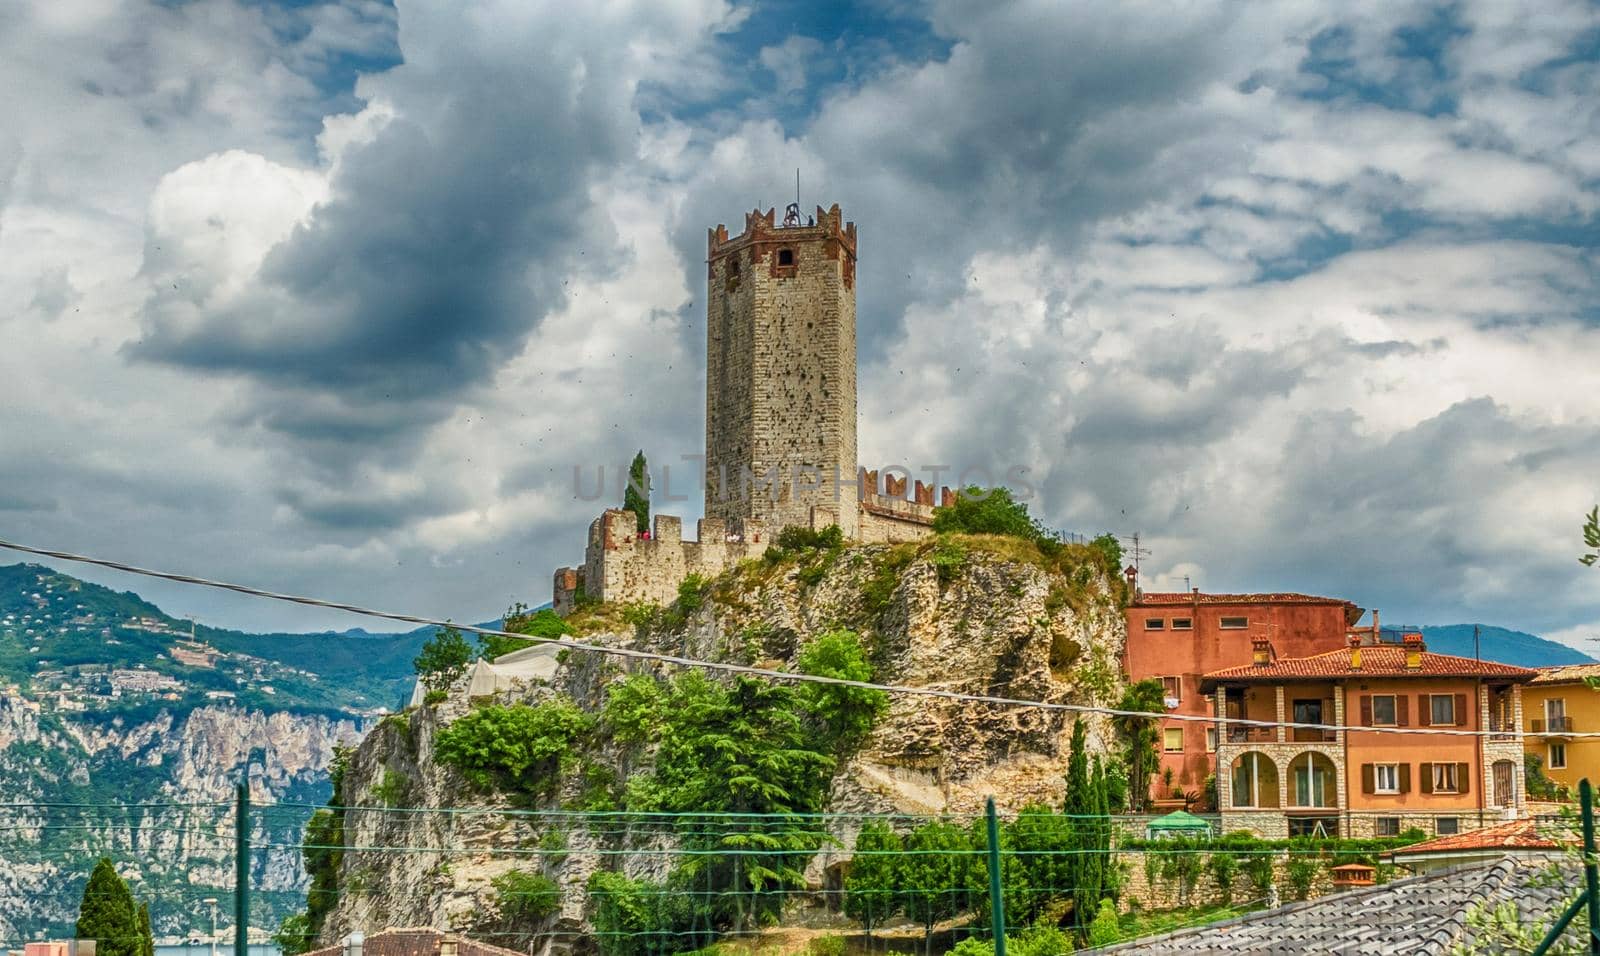 The medieval tower of Malcesine Castle, Lake Garda, Italy by marcorubino